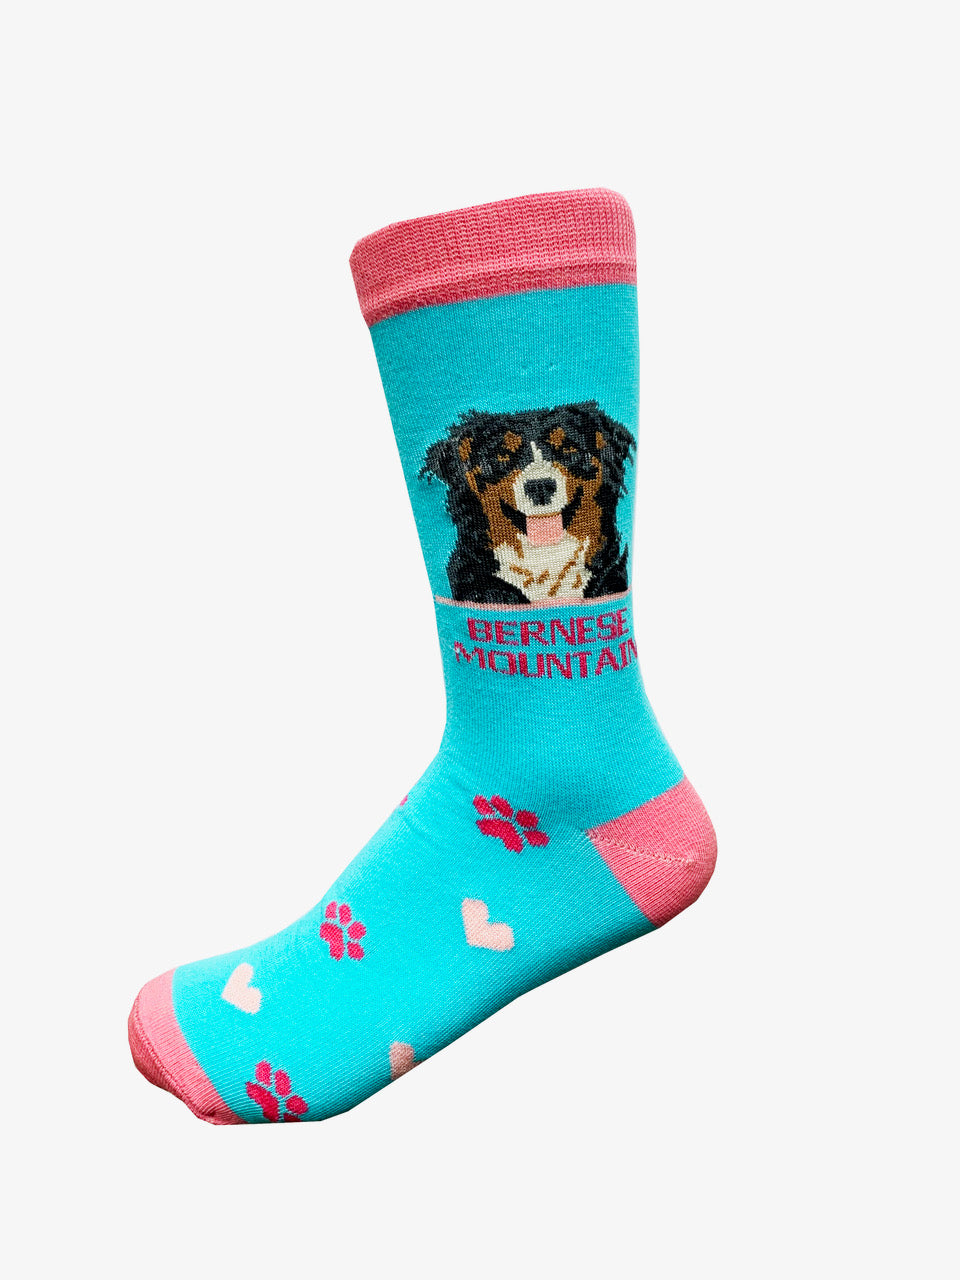 Bernese socks for women - turquoise & hot pink